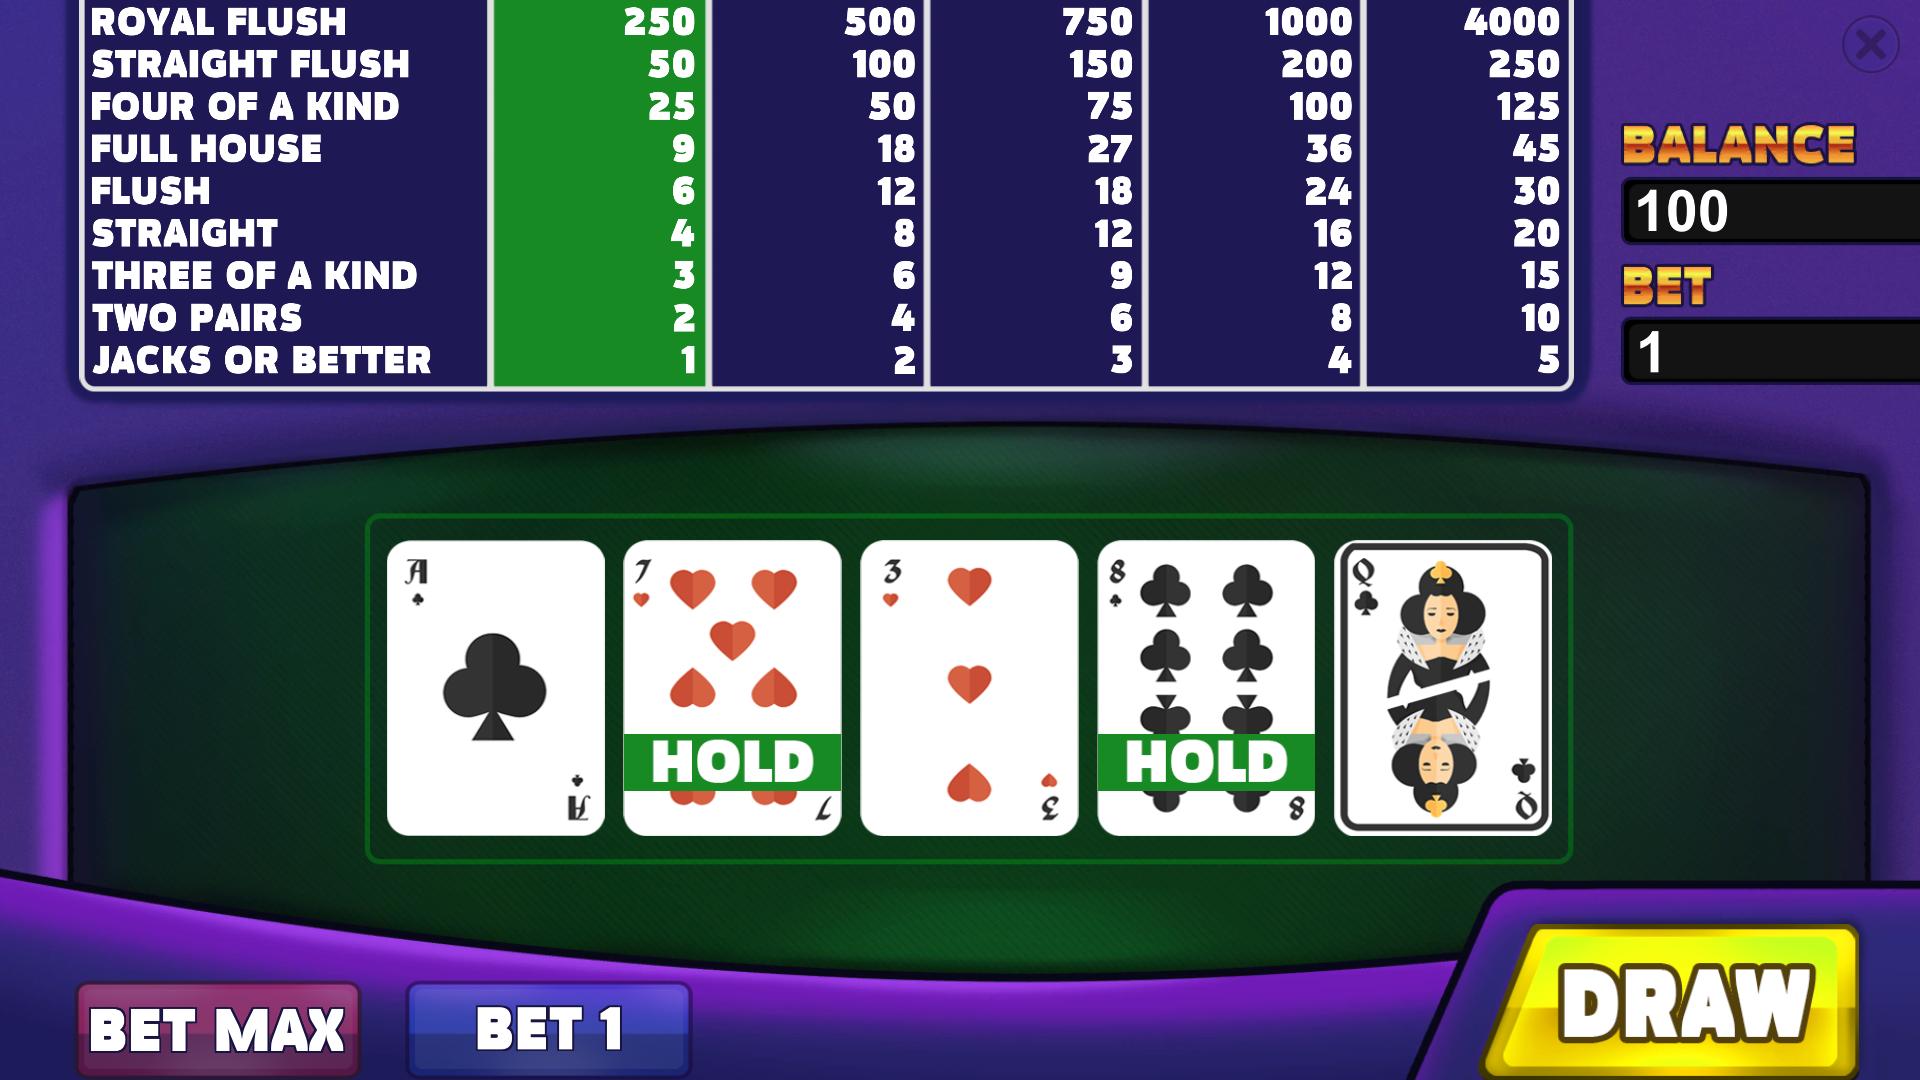 Royal Casino: Video Poker screenshot